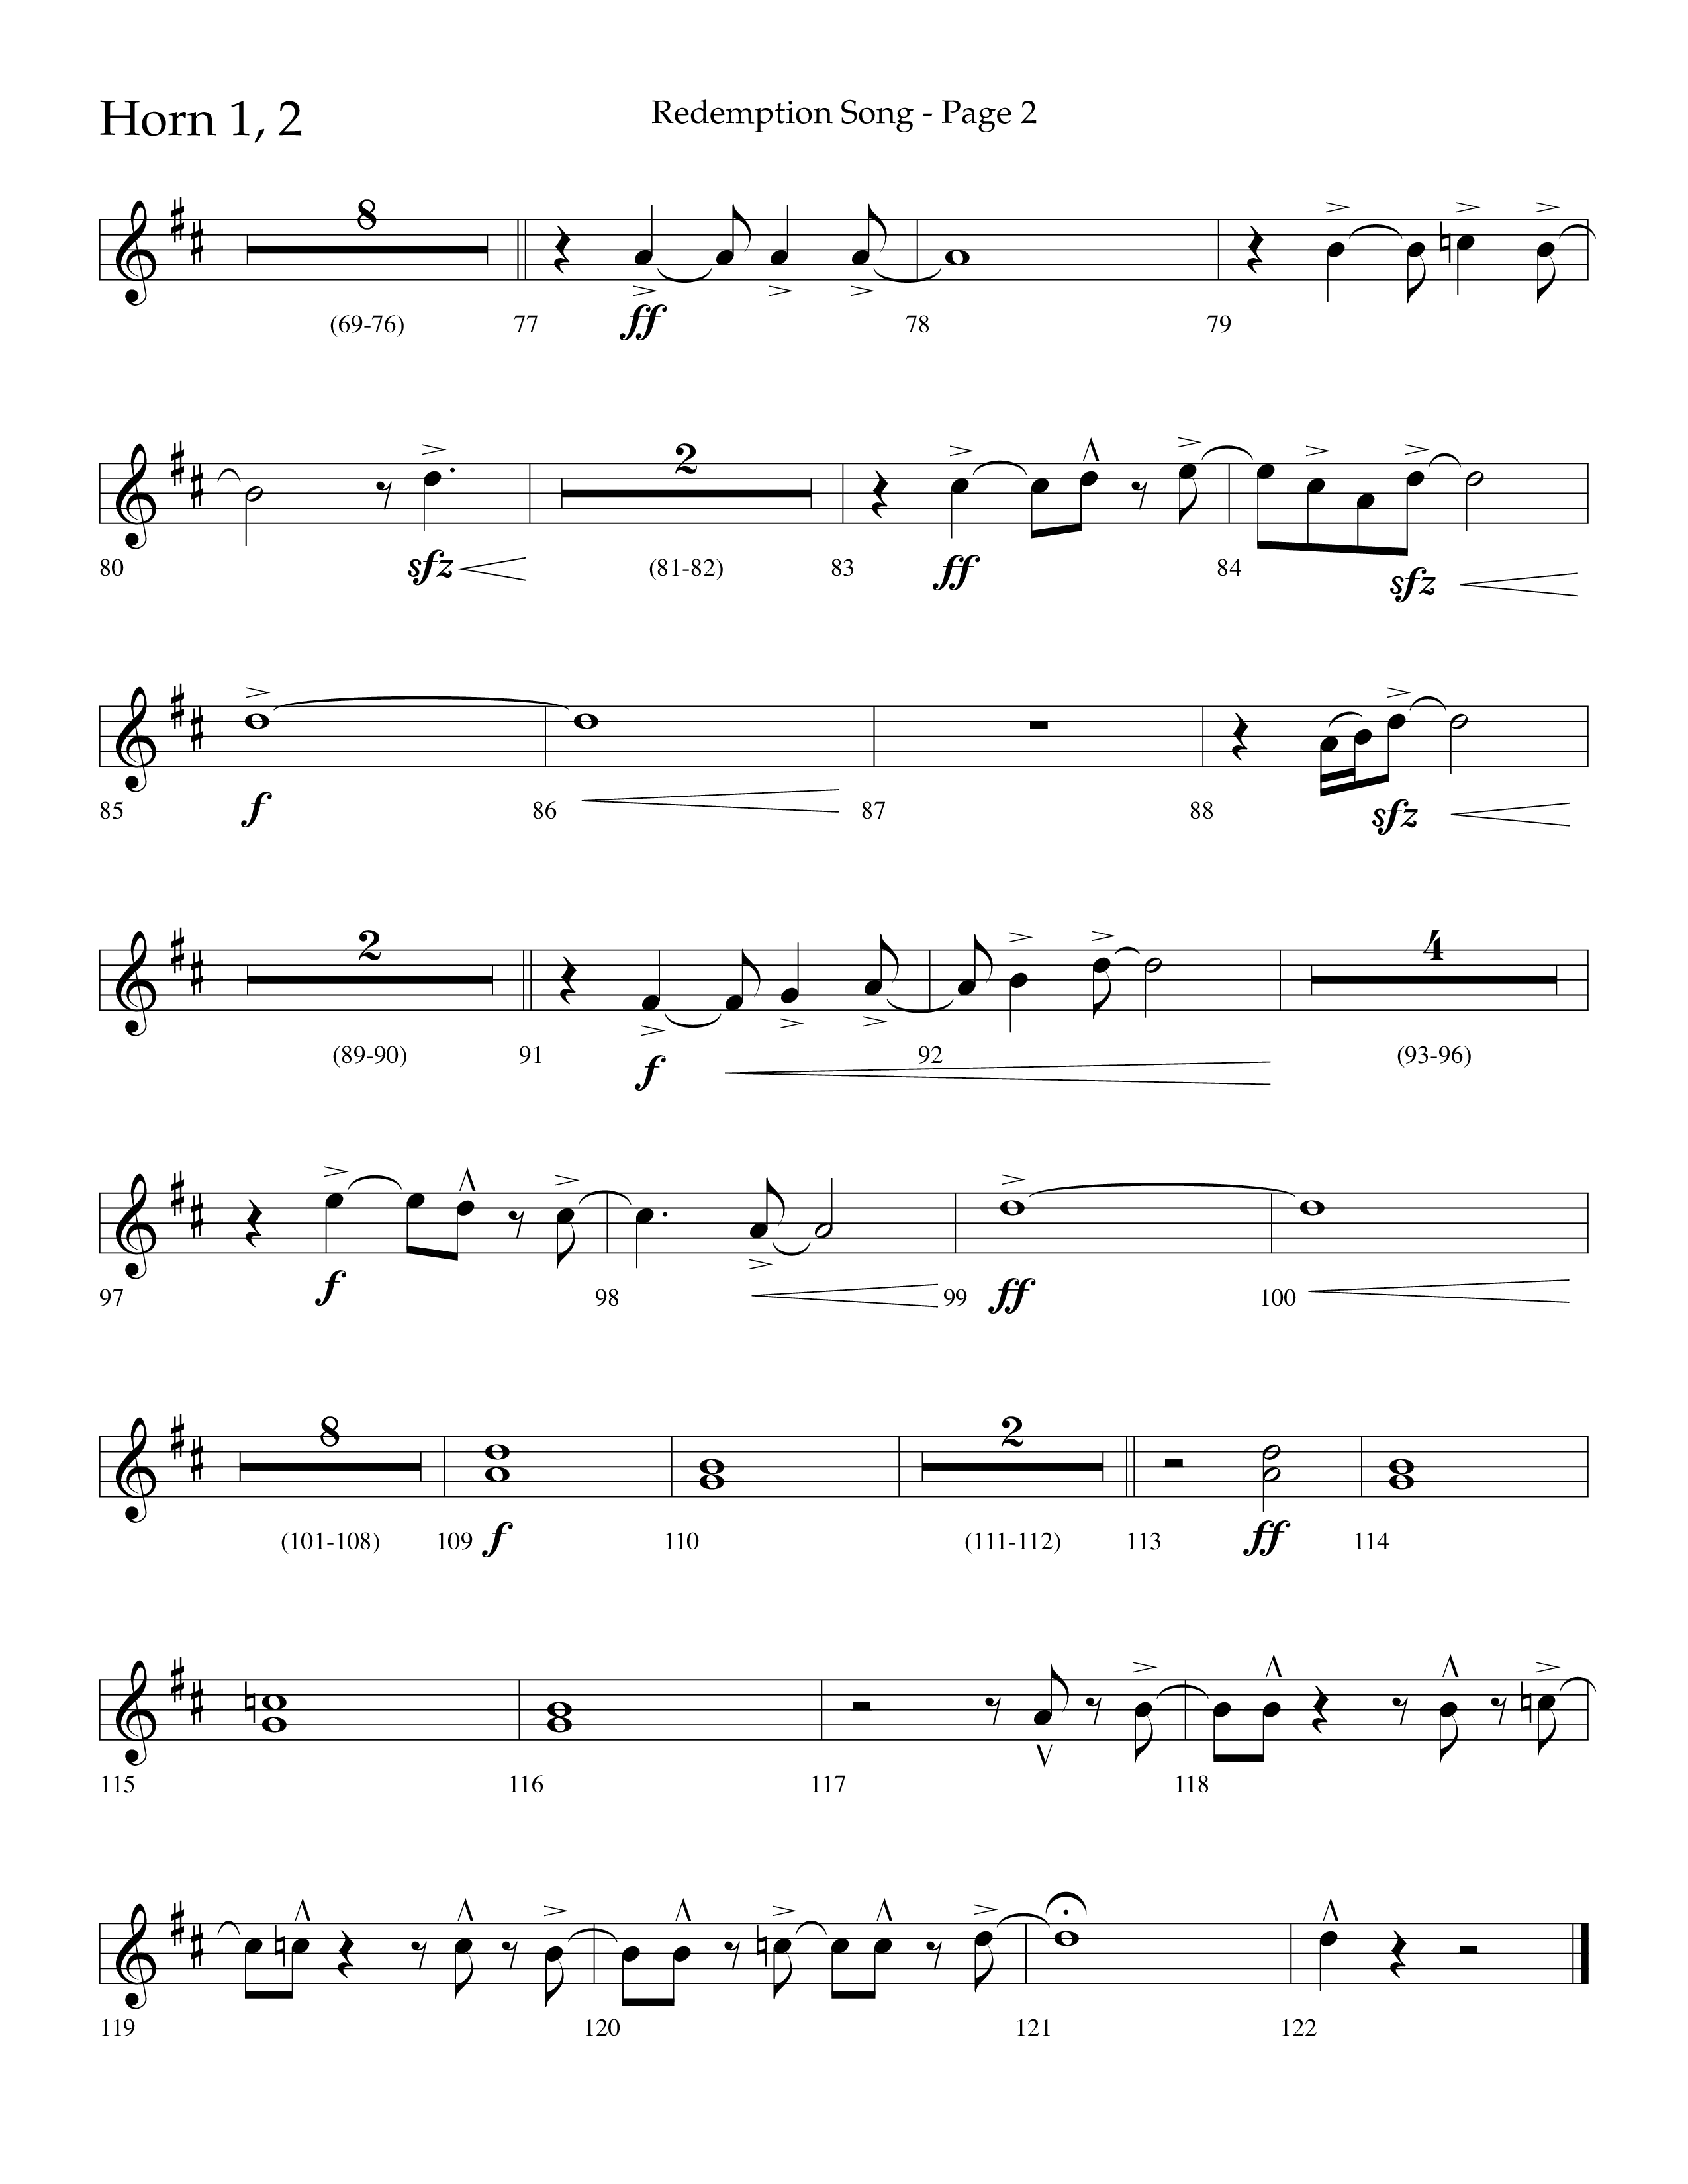 Redemption Song (Choral Anthem SATB) French Horn 1/2 (Lifeway Choral / Arr. Cliff Duren)